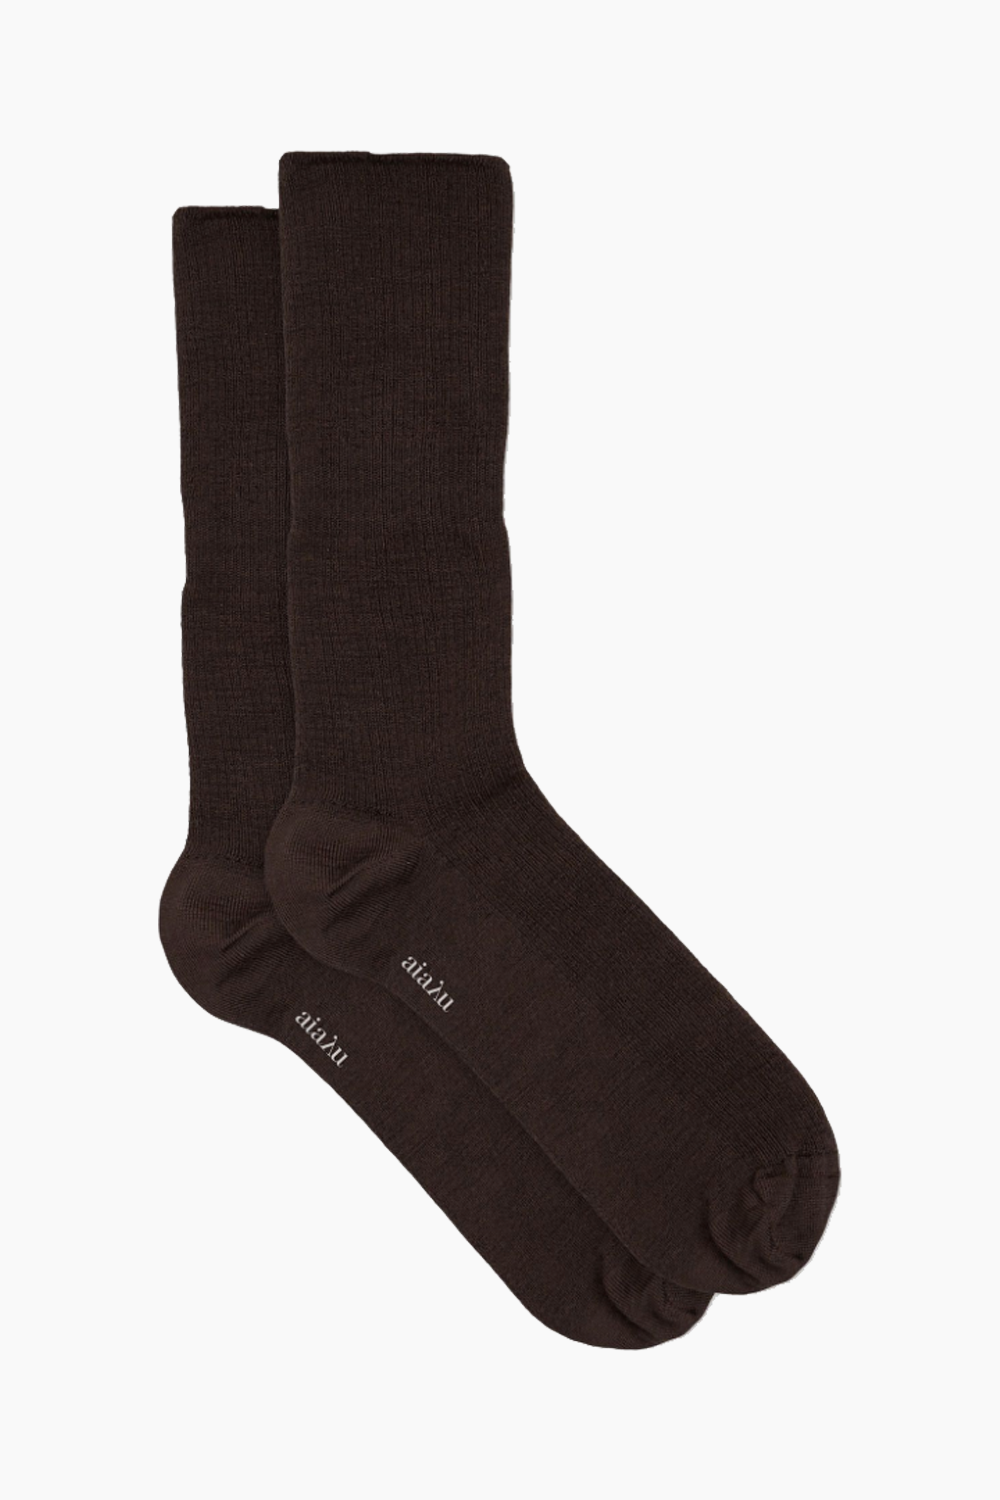 Wool Rib Socks - Brown - Aiayu